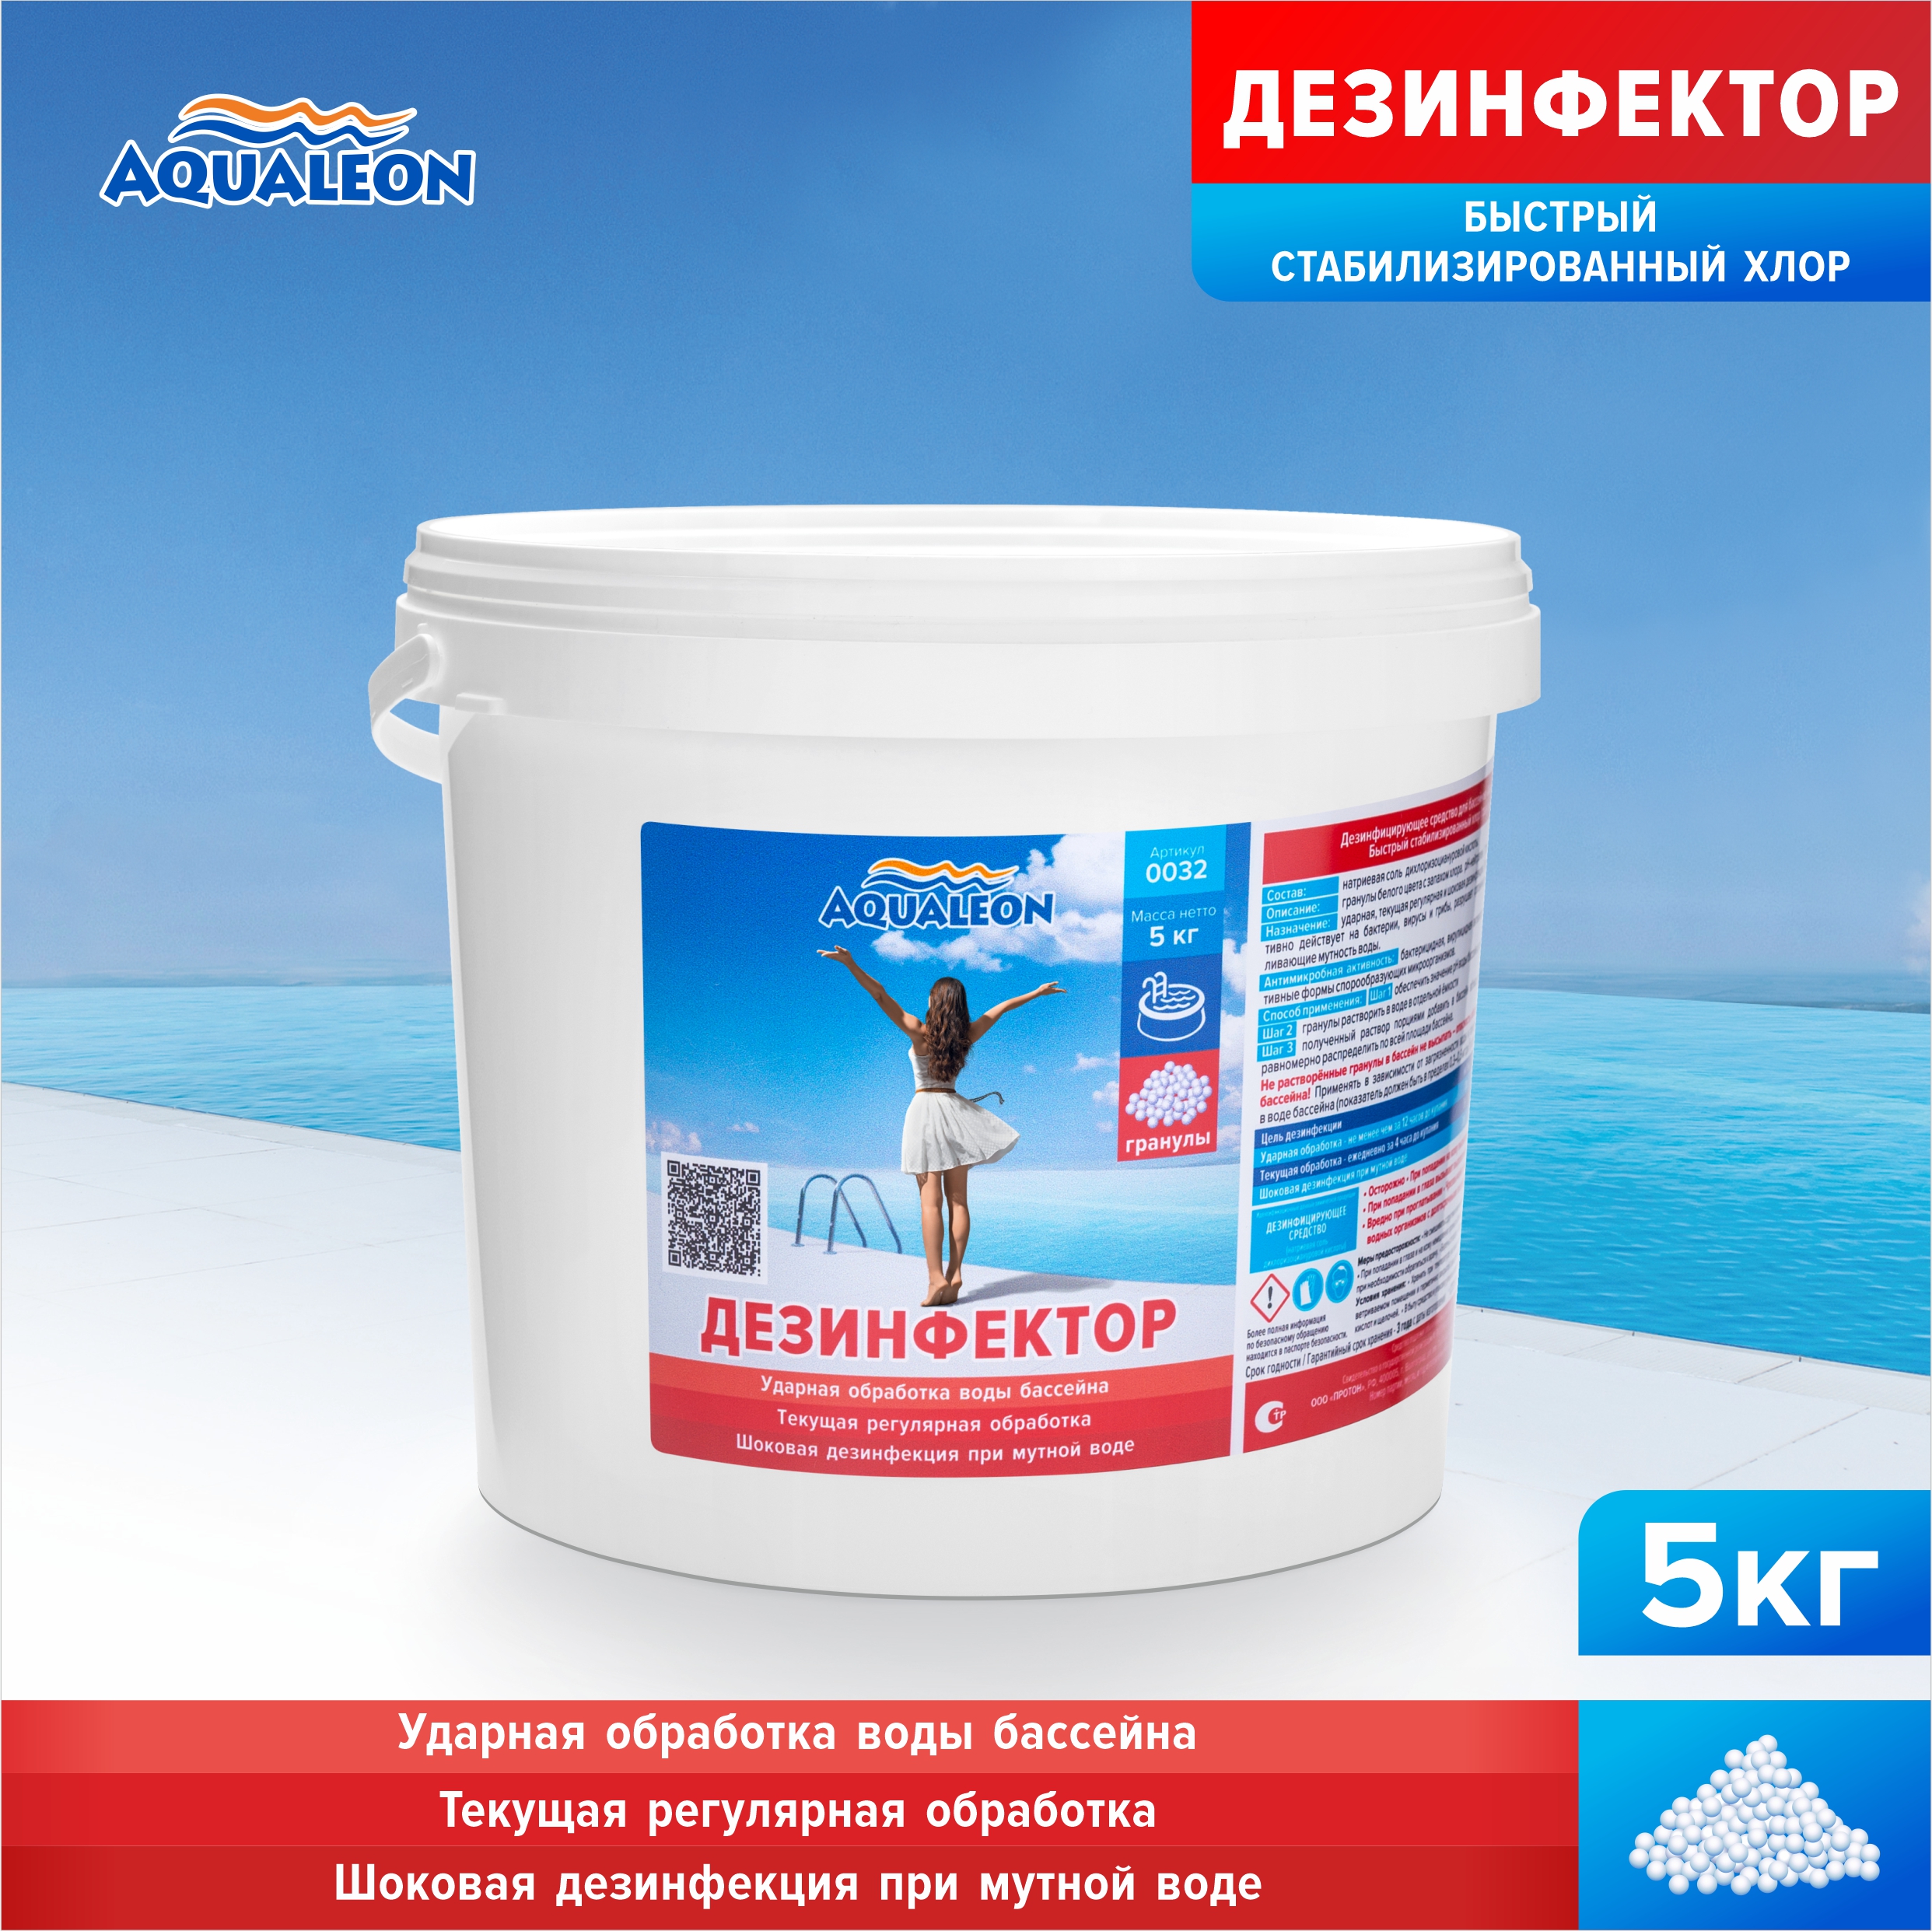 Быстрый хлор для бассейна (БСХ) Aqualeon гранулы, 5 кг